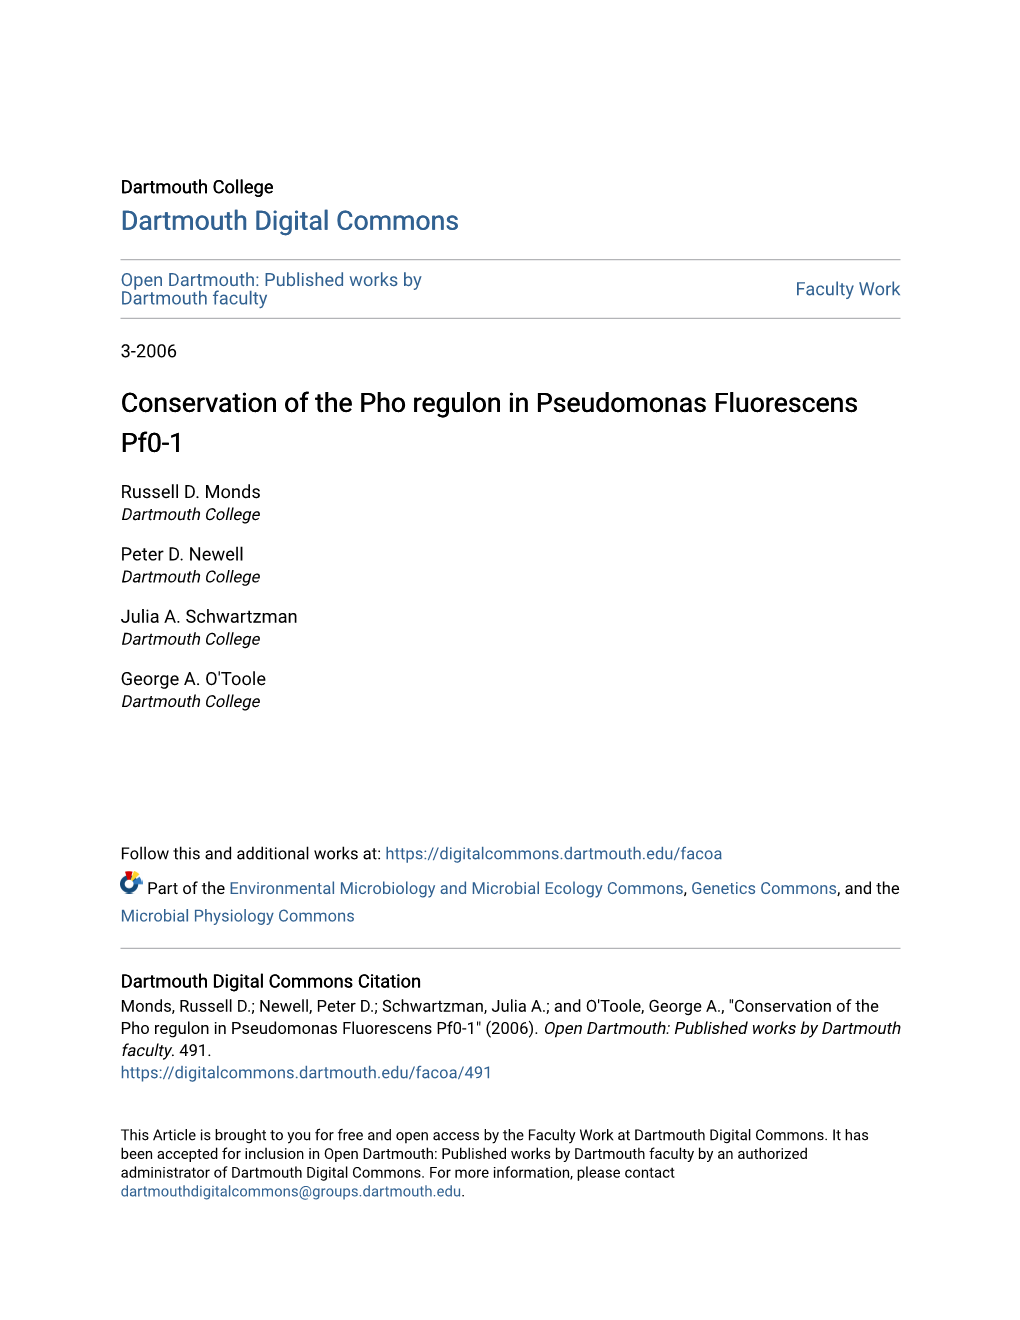 Conservation of the Pho Regulon in Pseudomonas Fluorescens Pf0-1